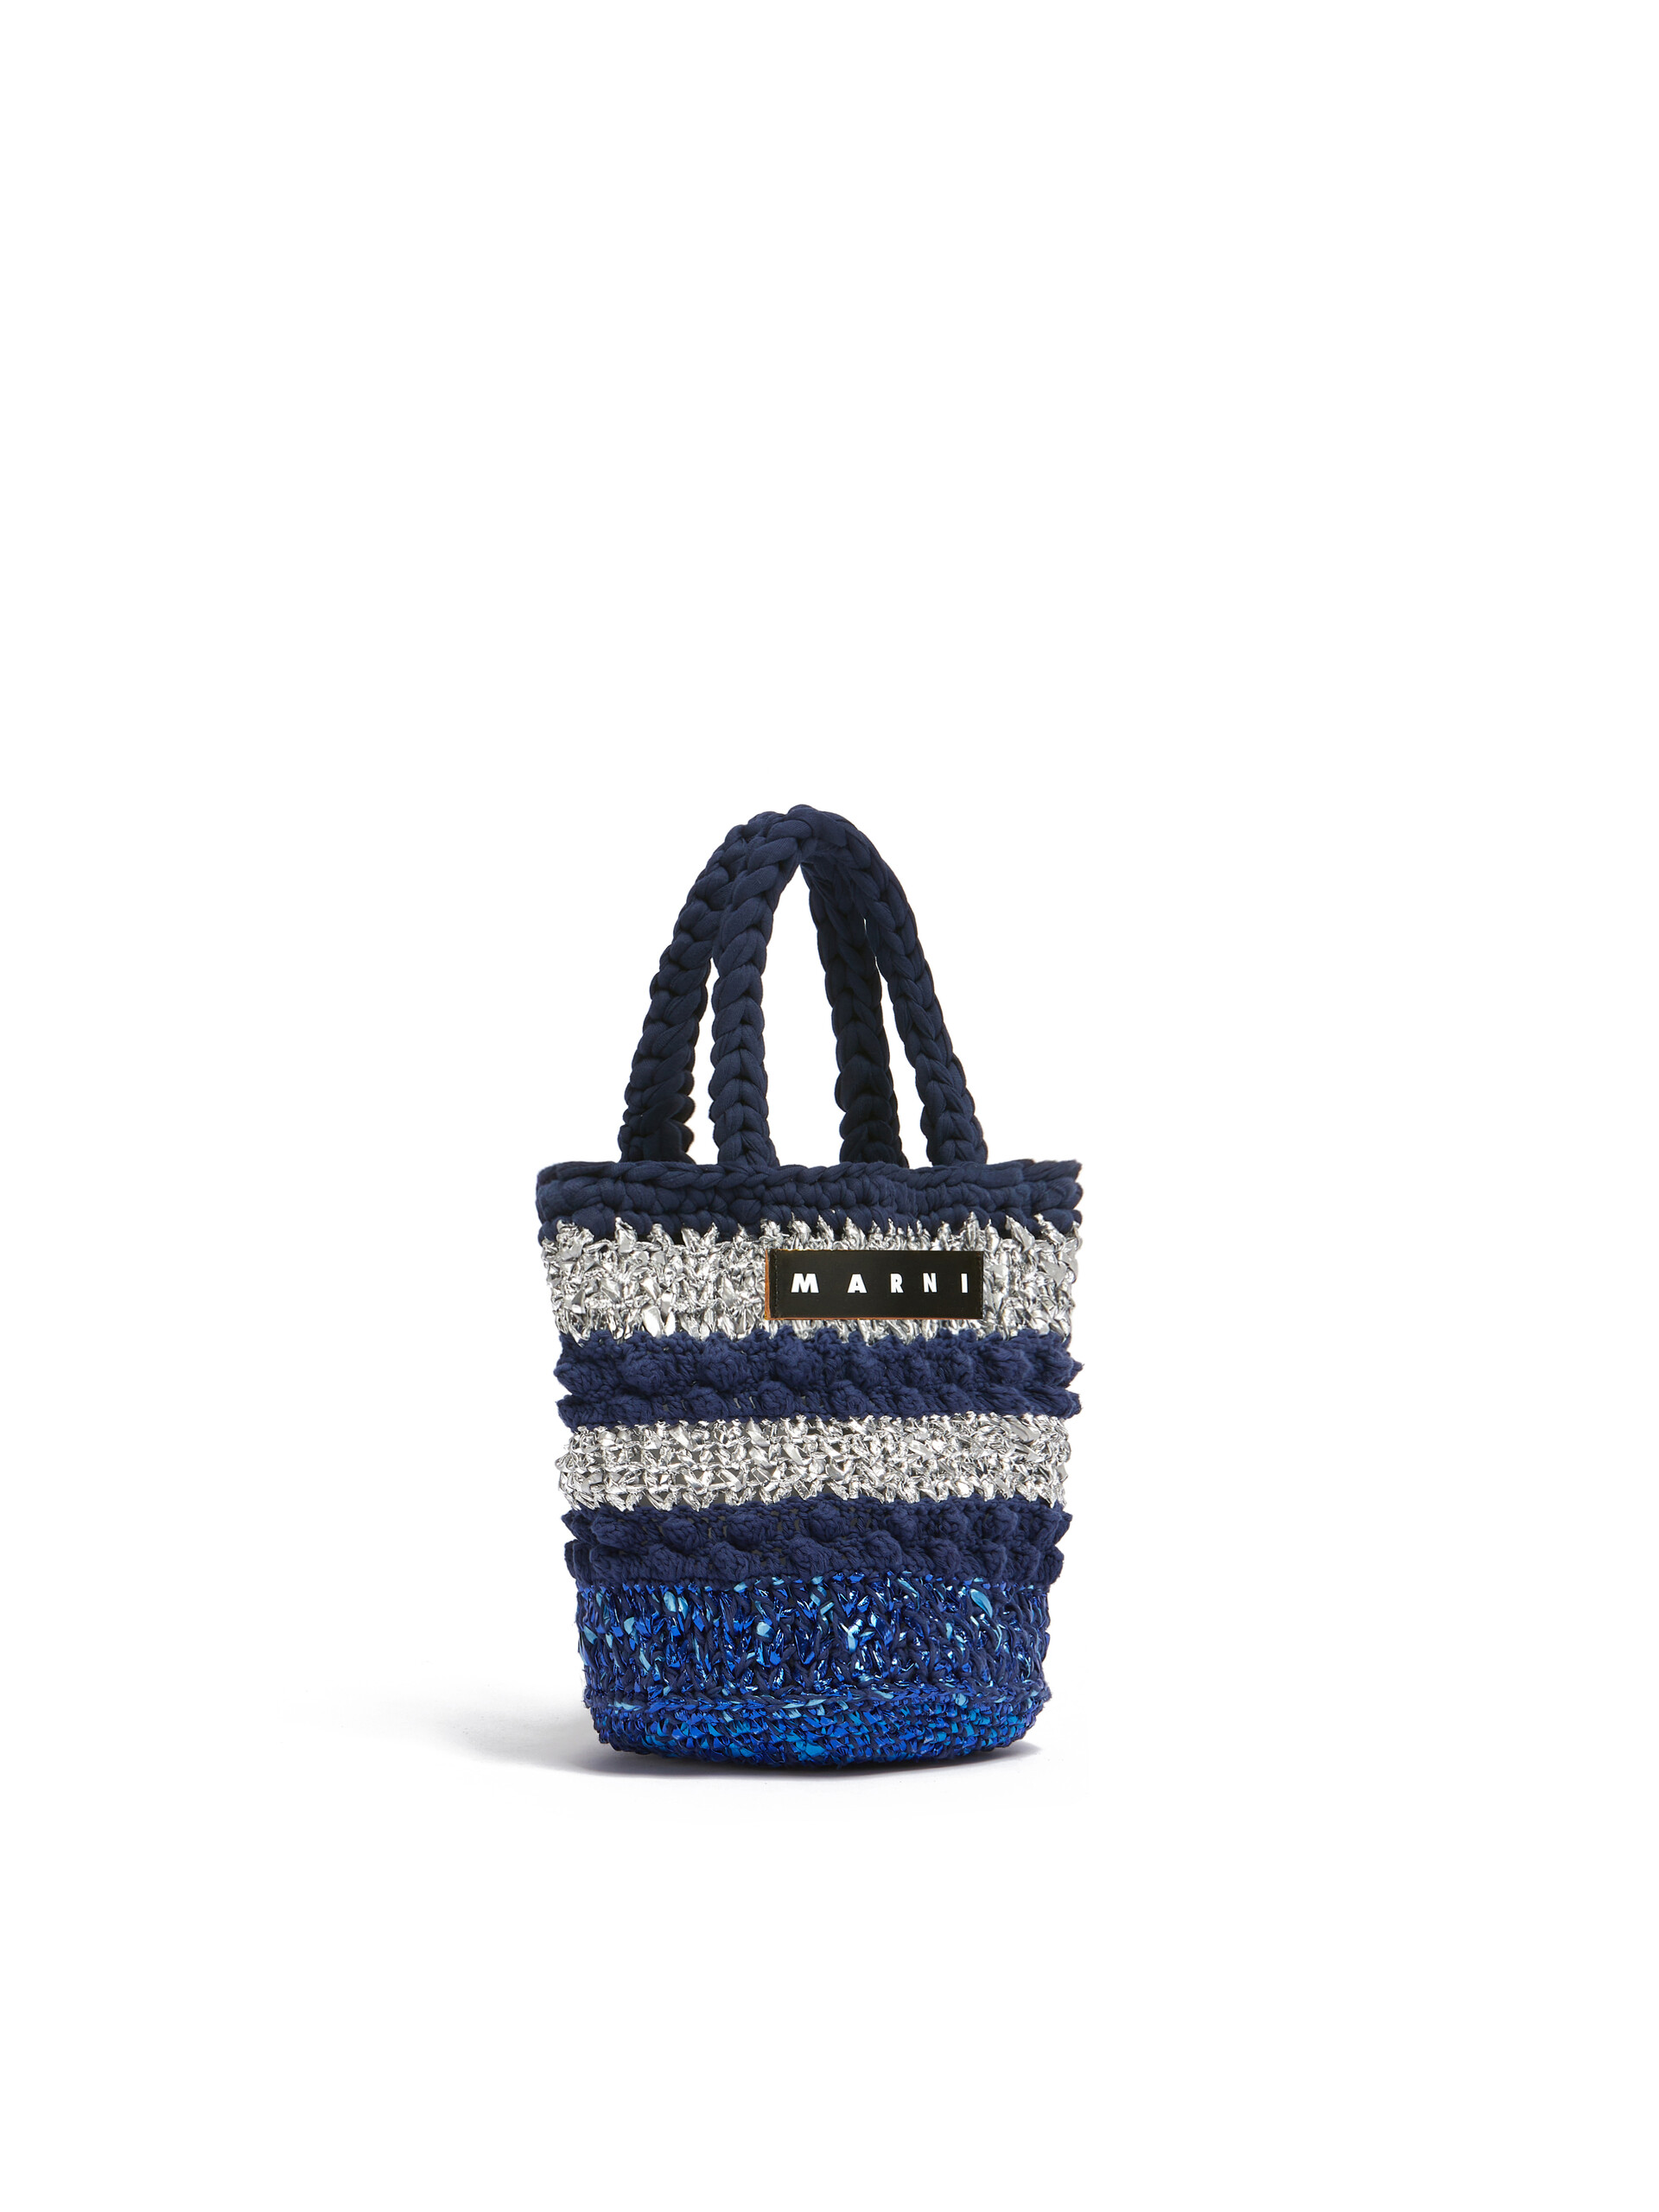 Deep blue and silver bobble-knit MARNI MARKET BUCKET bag - Shopping Bags - Image 2